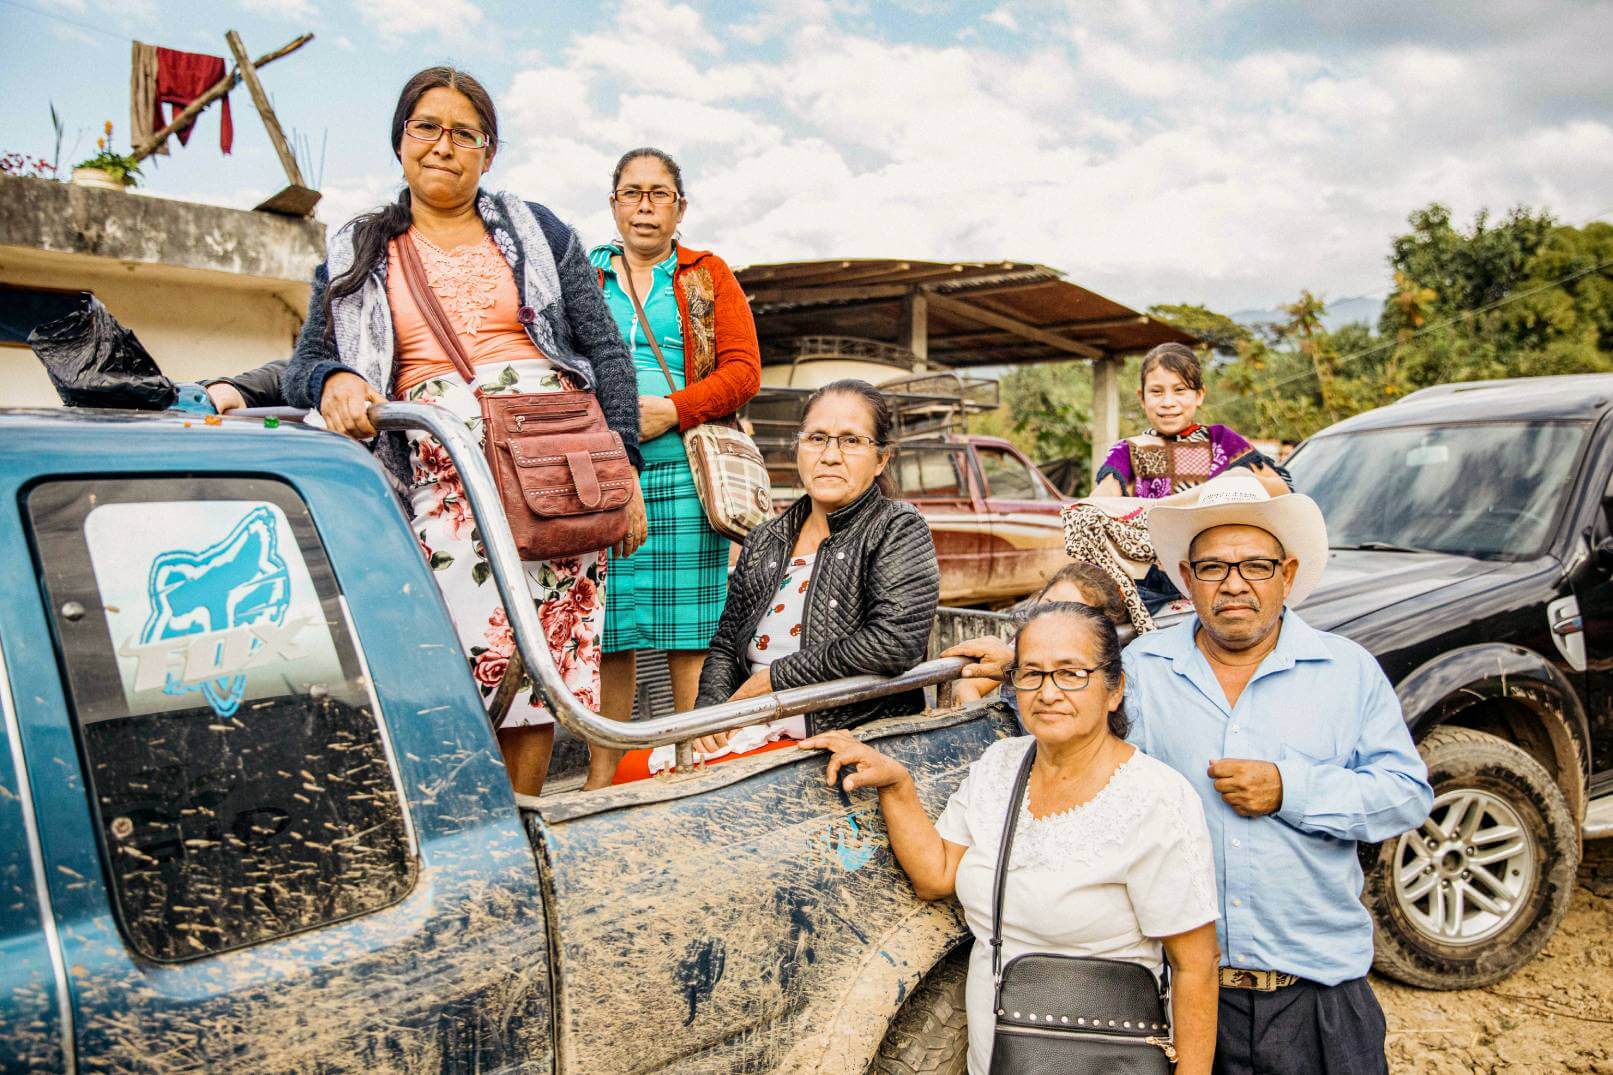 People from Guatemala farm